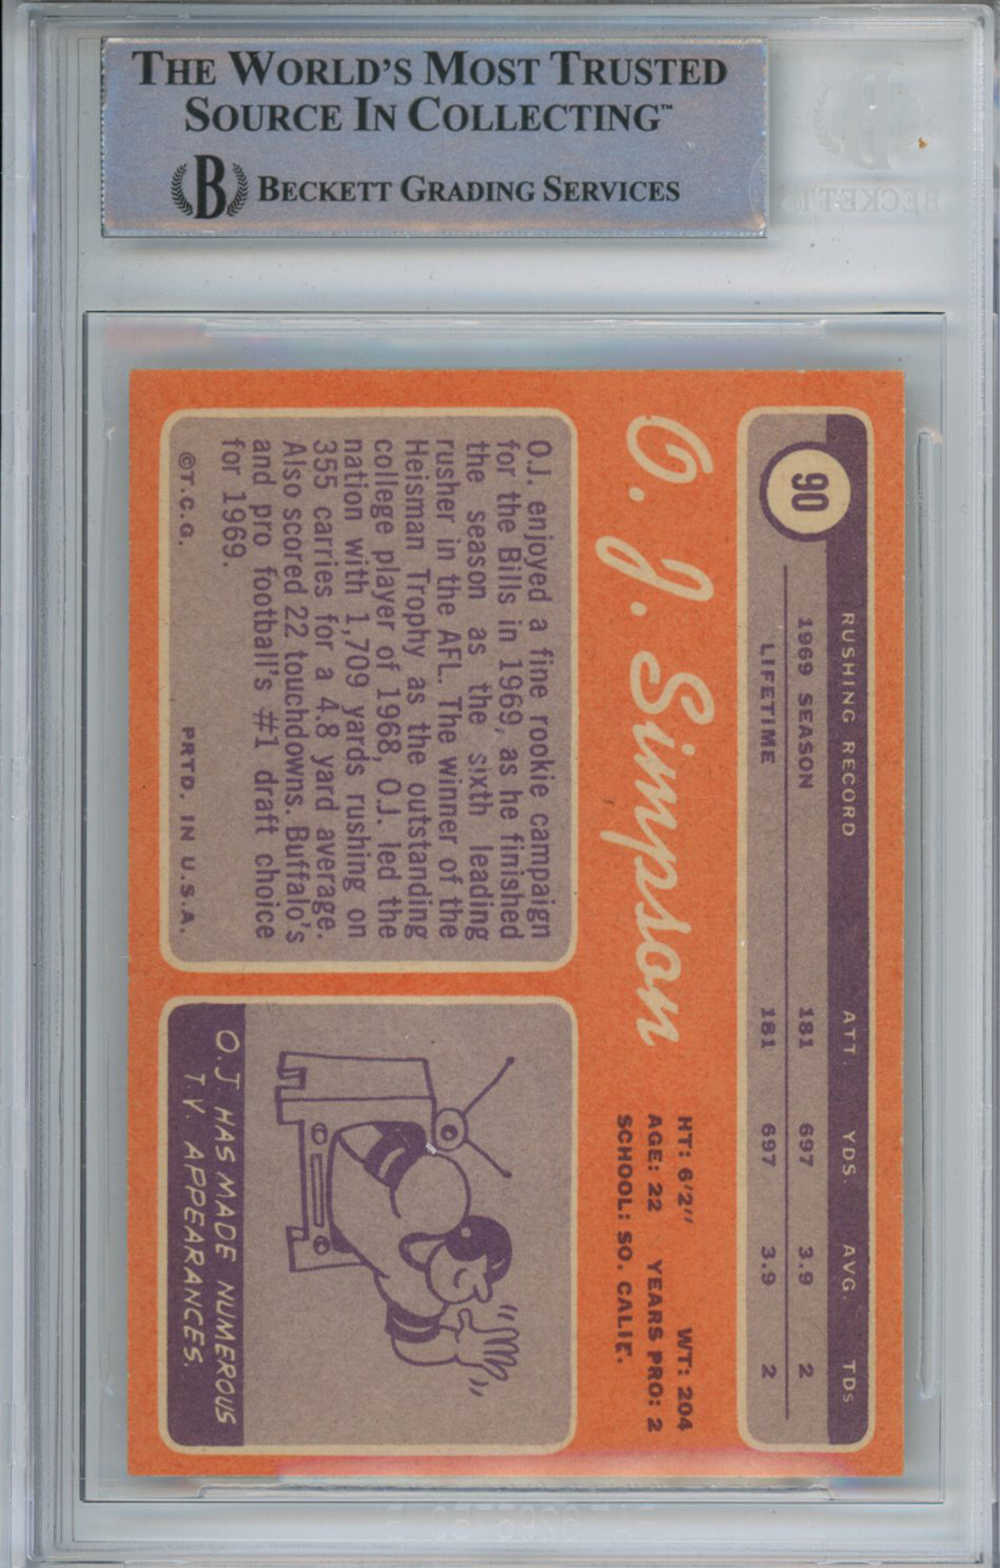 O.J. Simpson Autographed 1970 Topps #90 Rookie Card Beckett Slab